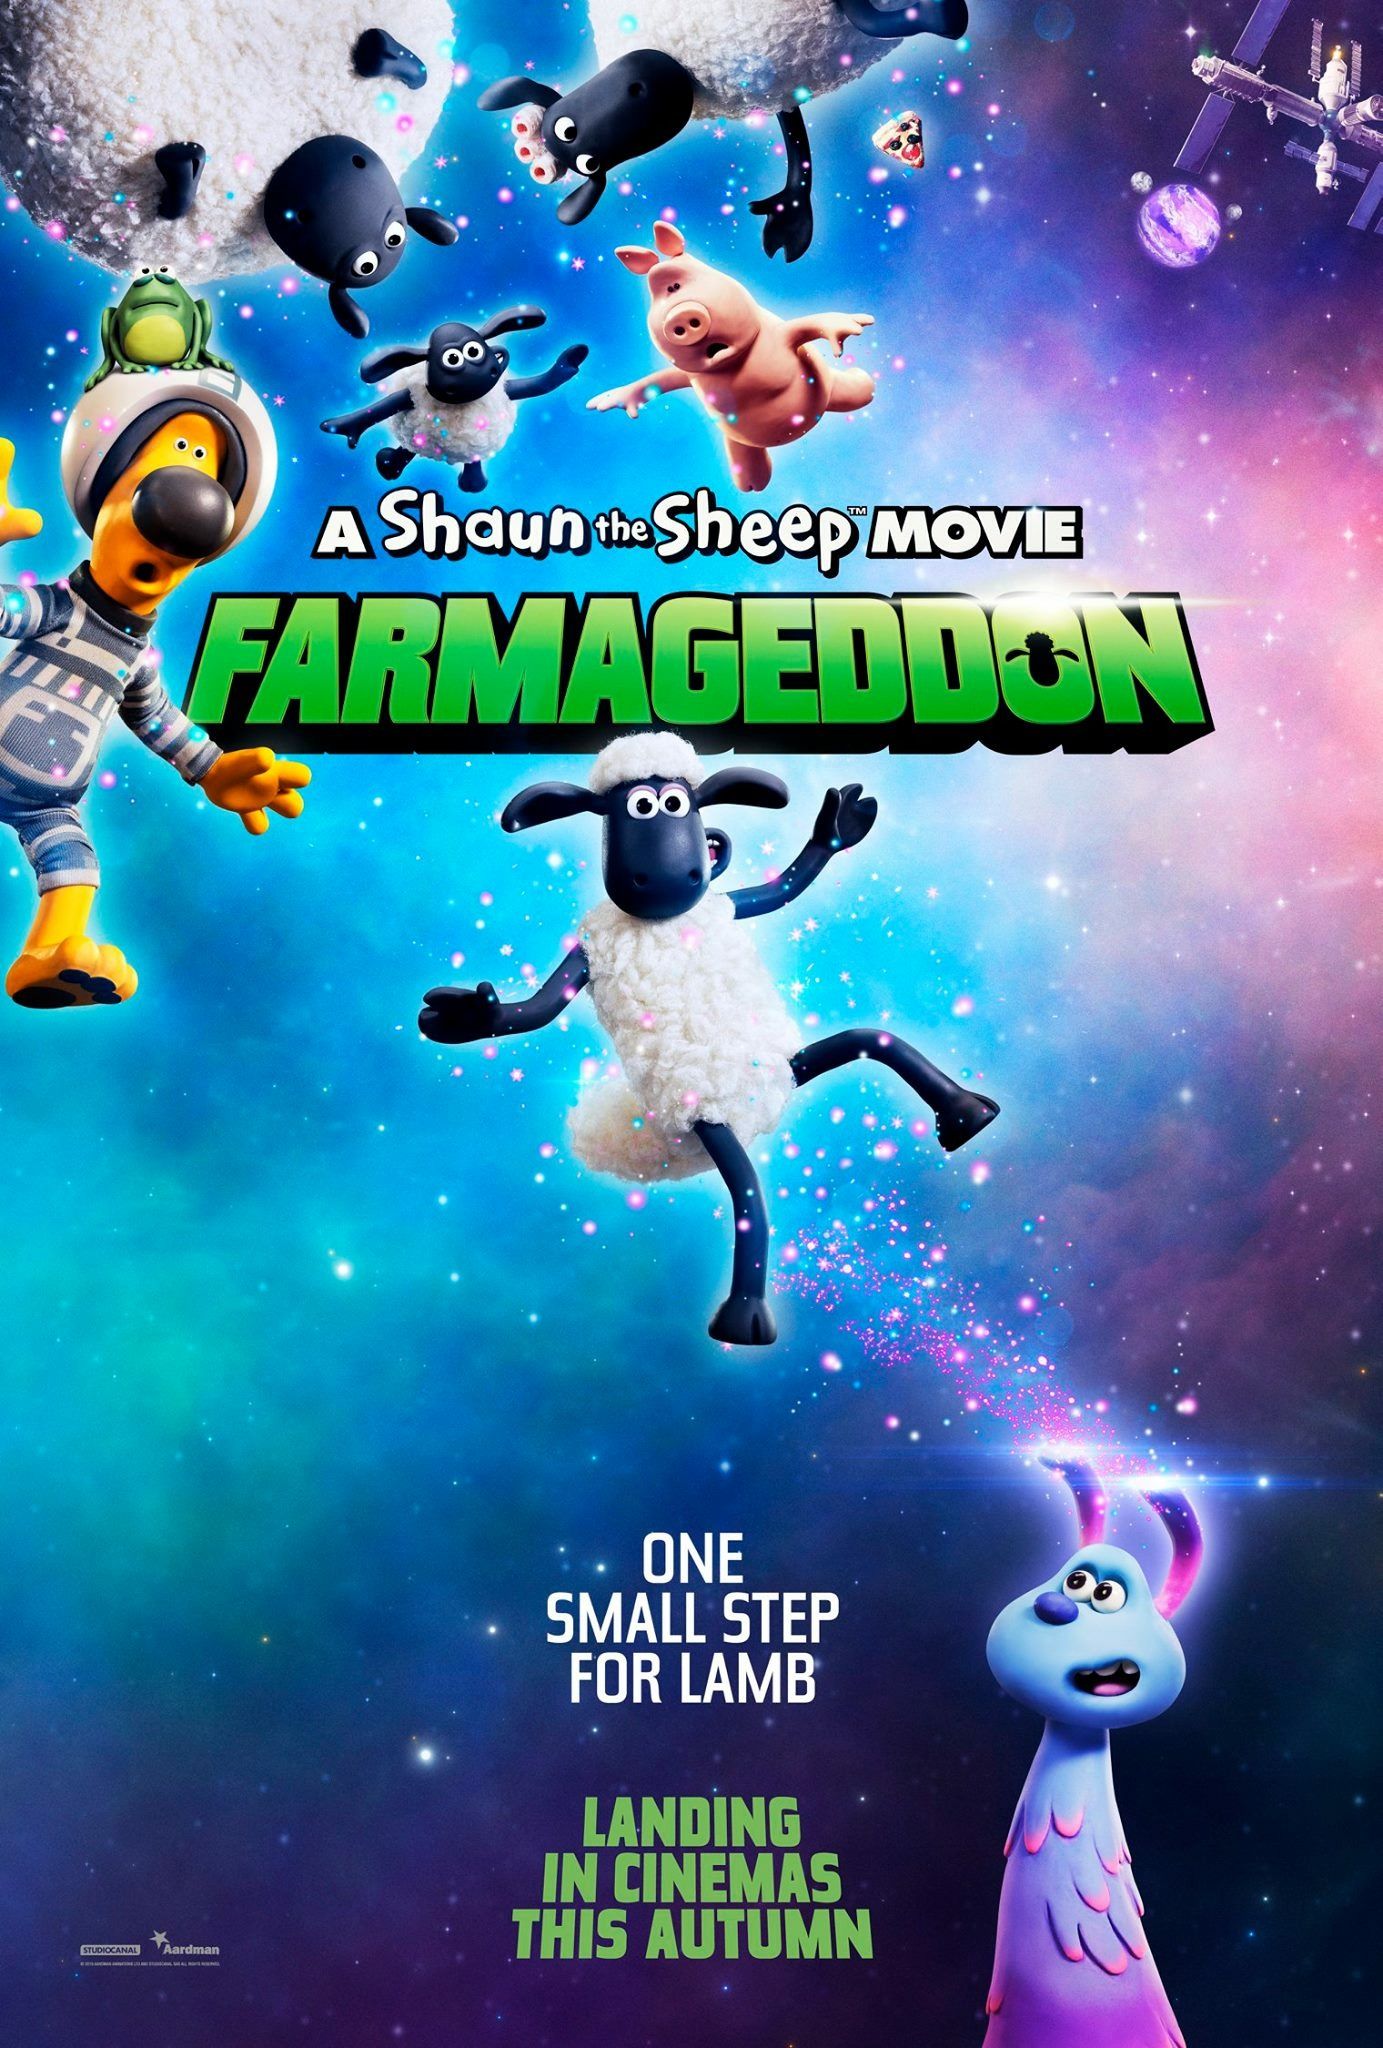 Shaun the Sheep 2 poster